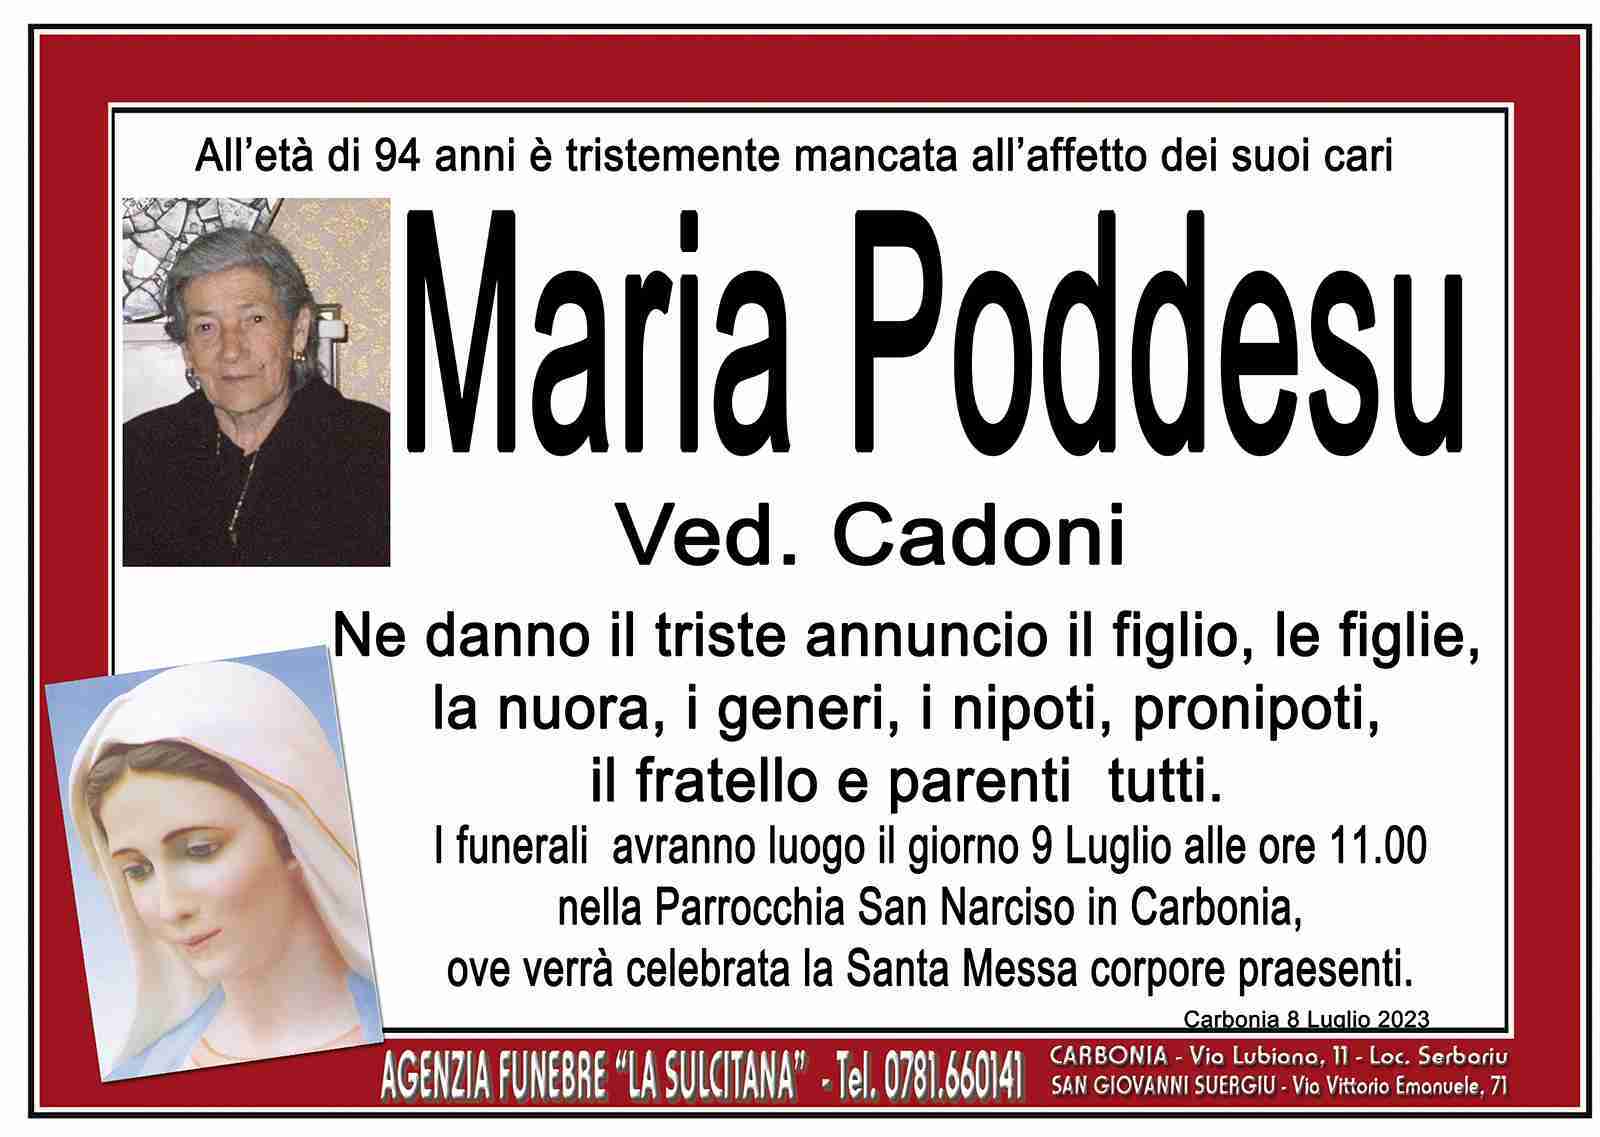 Maria Poddesu